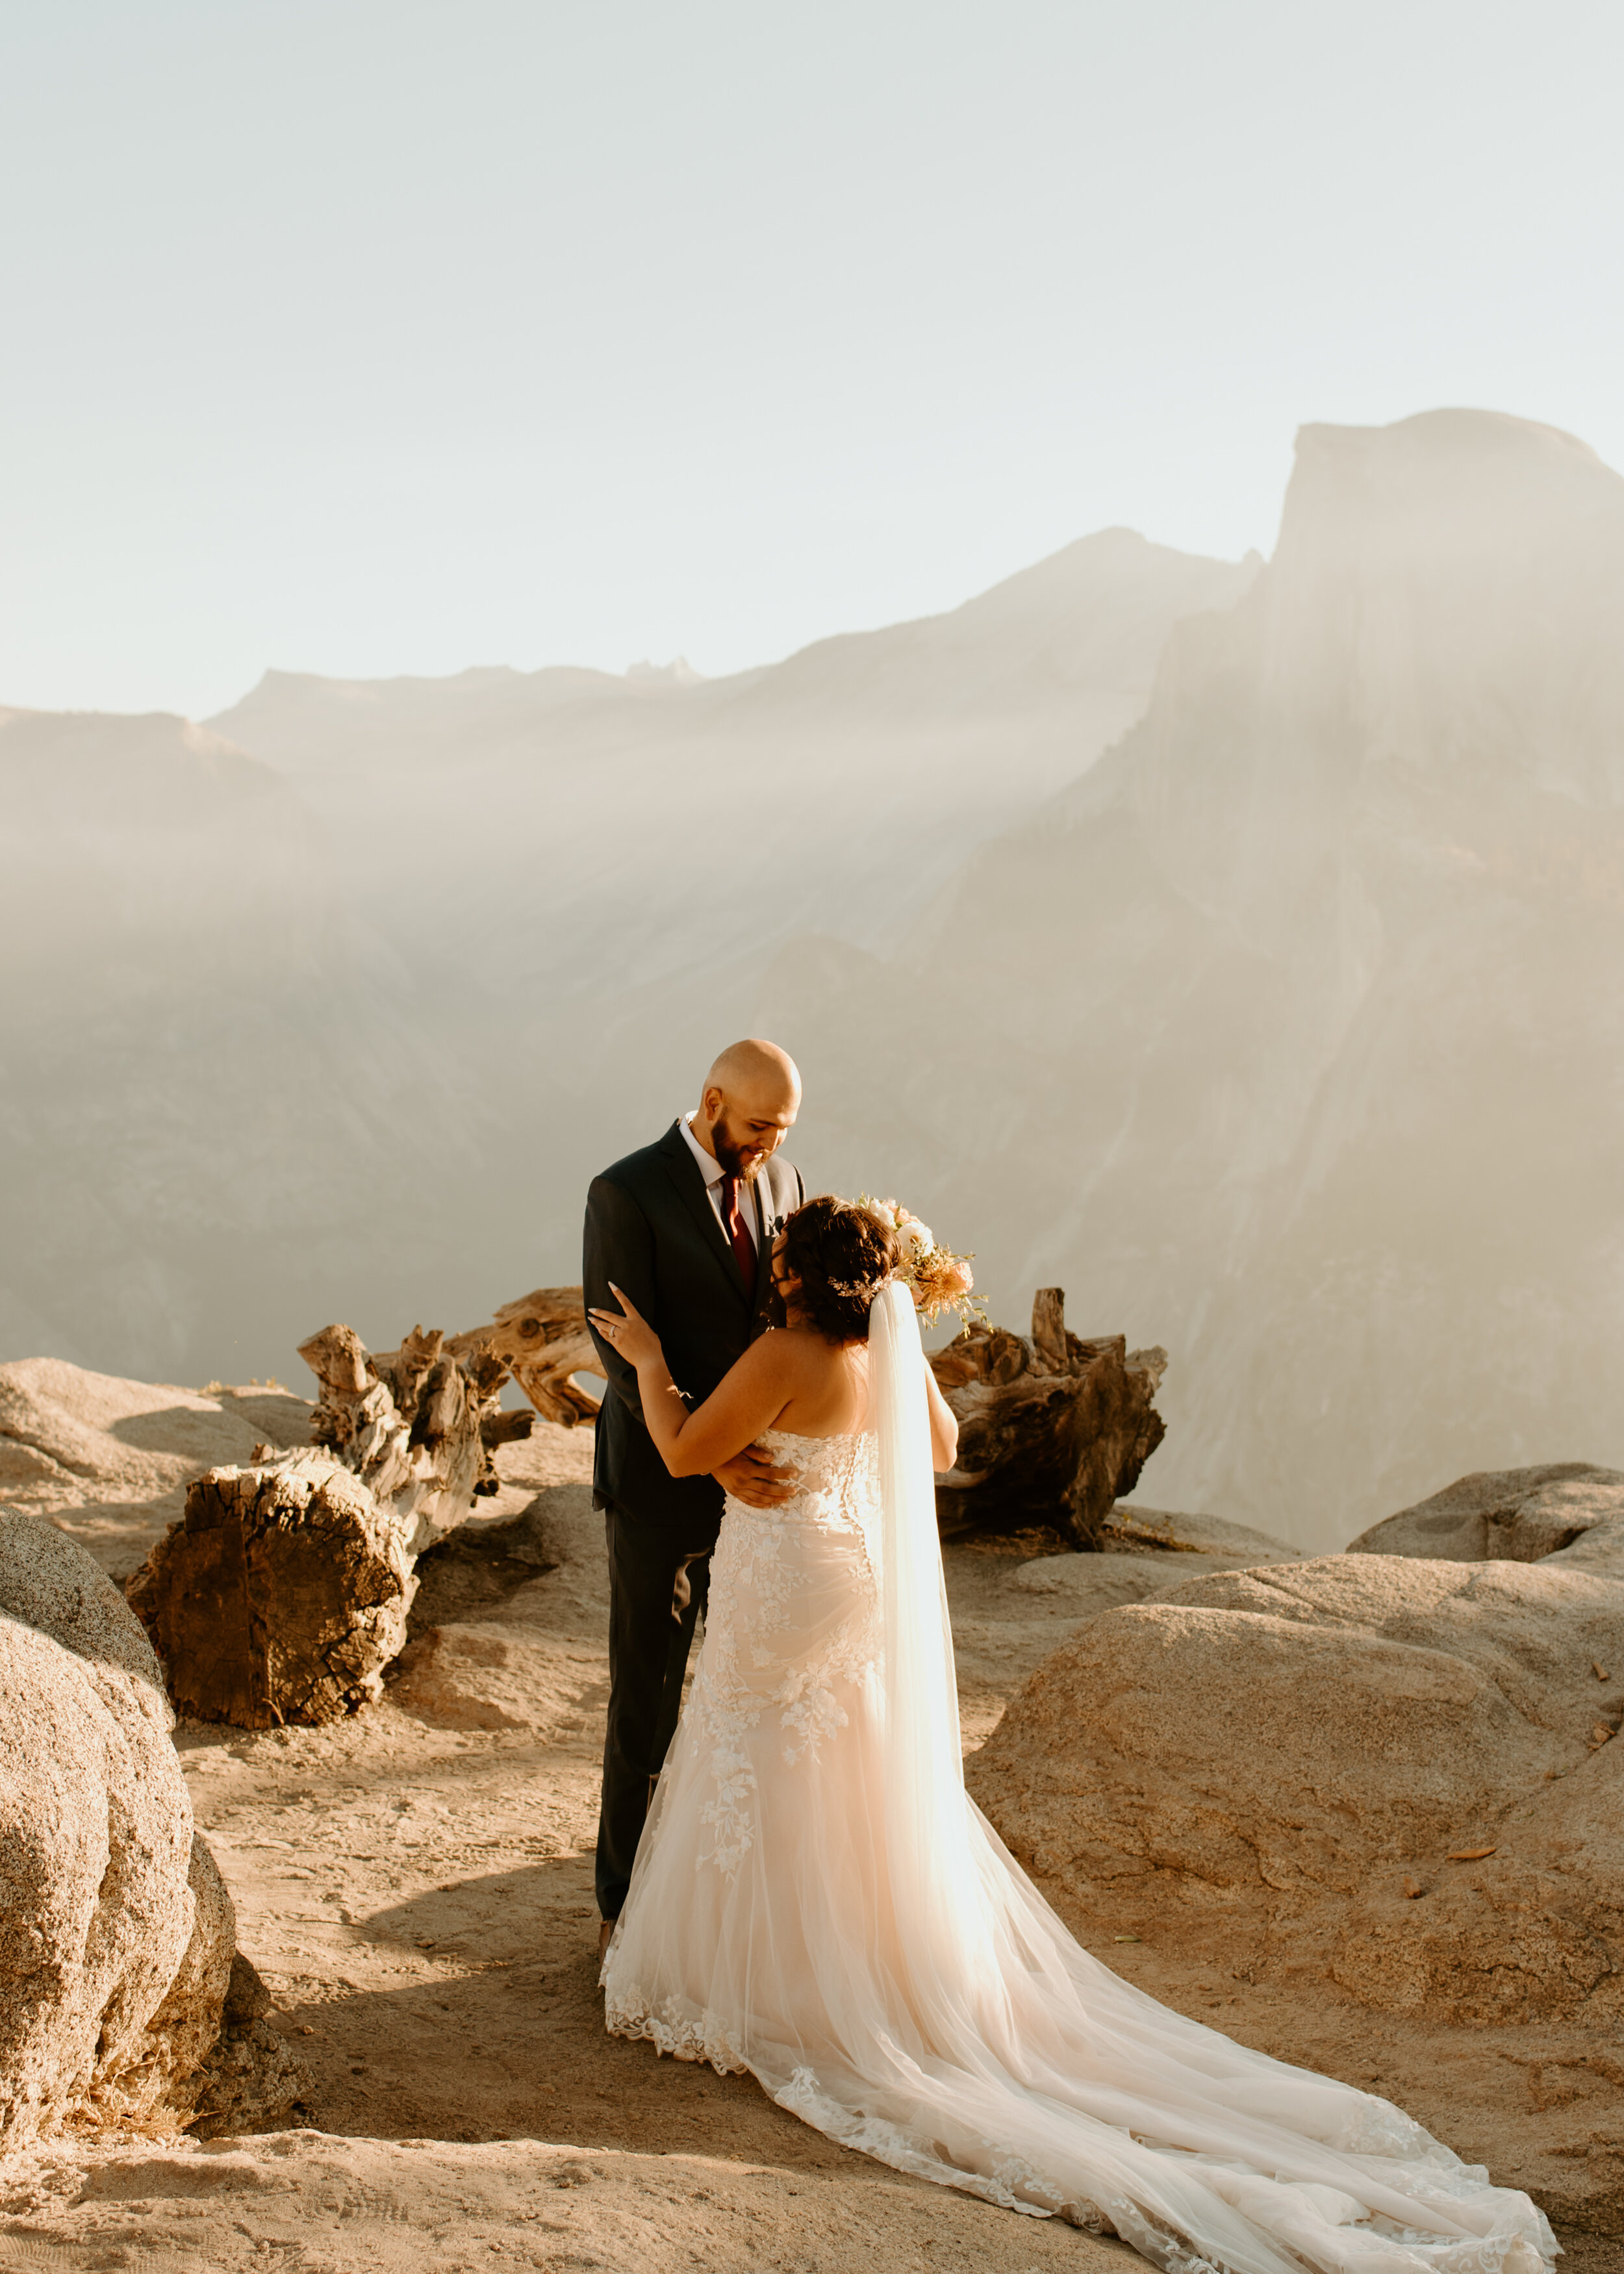 Glacier Point Elopement | First Look | Yosemite National Park Elopement and Wedding Photographer | Sunrise adventure elopement | California Elopement Photographer